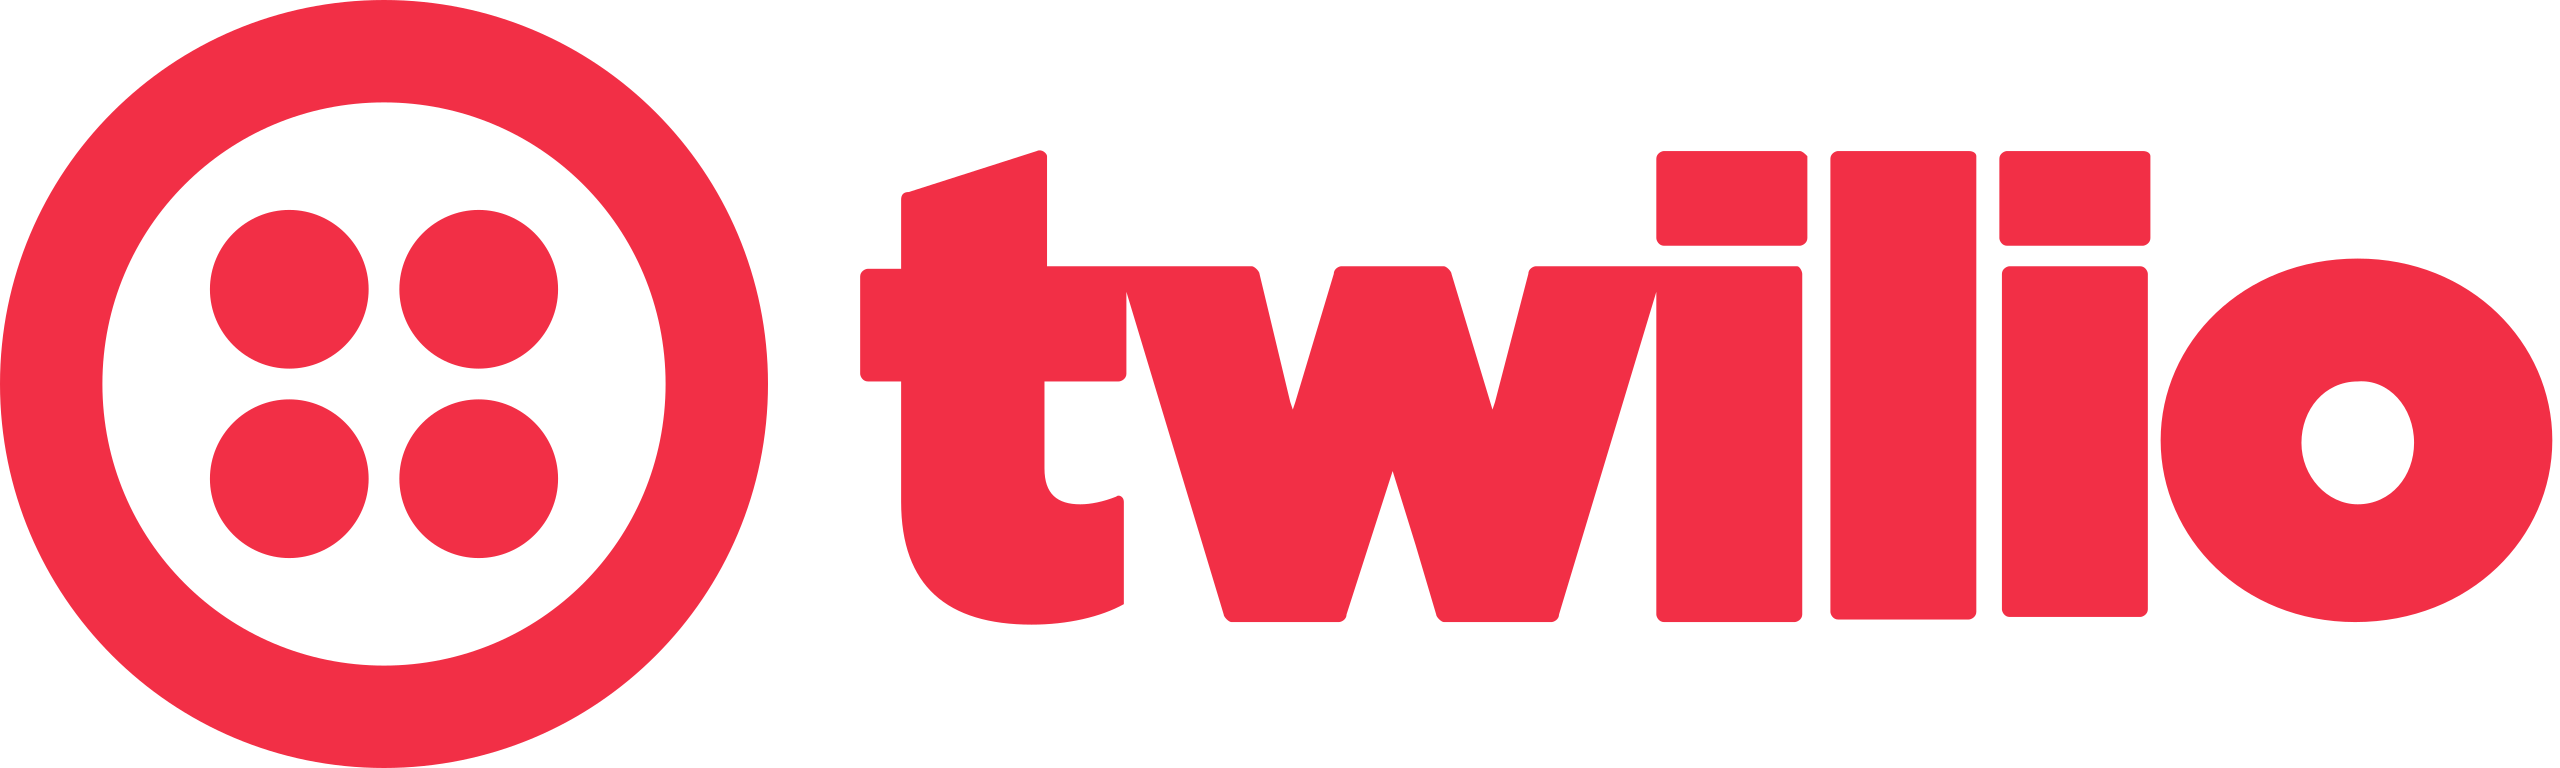 yoprint Twilio logo red.svg